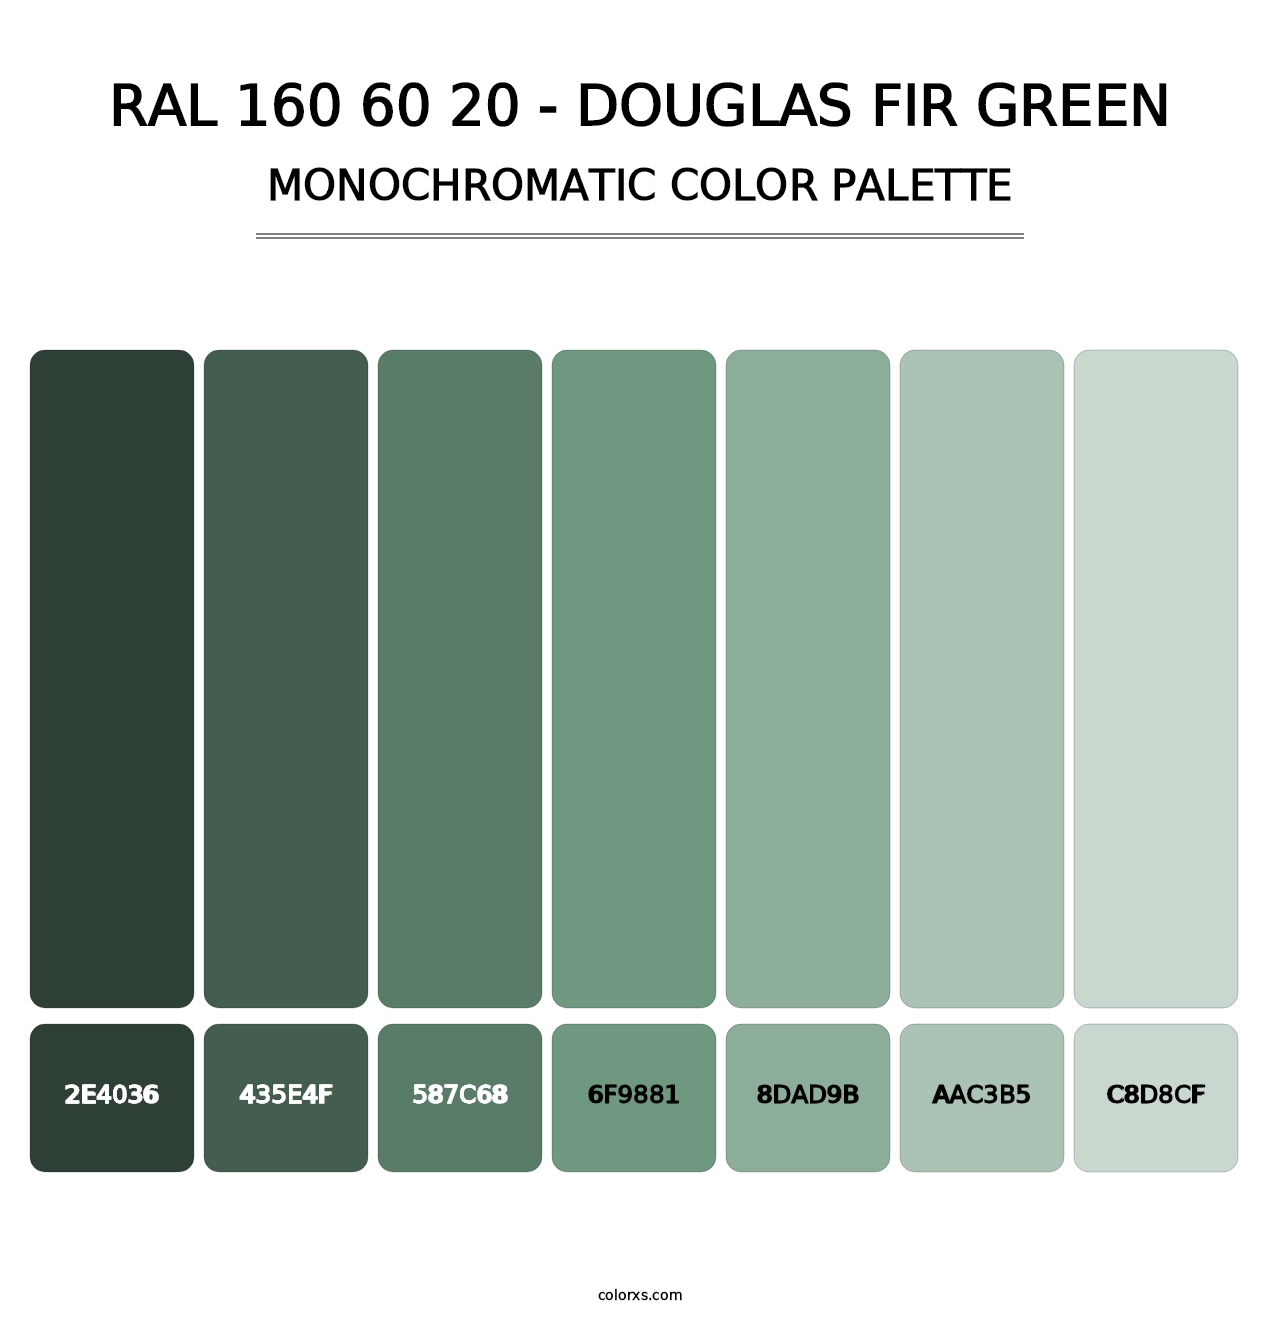 RAL 160 60 20 - Douglas Fir Green - Monochromatic Color Palette